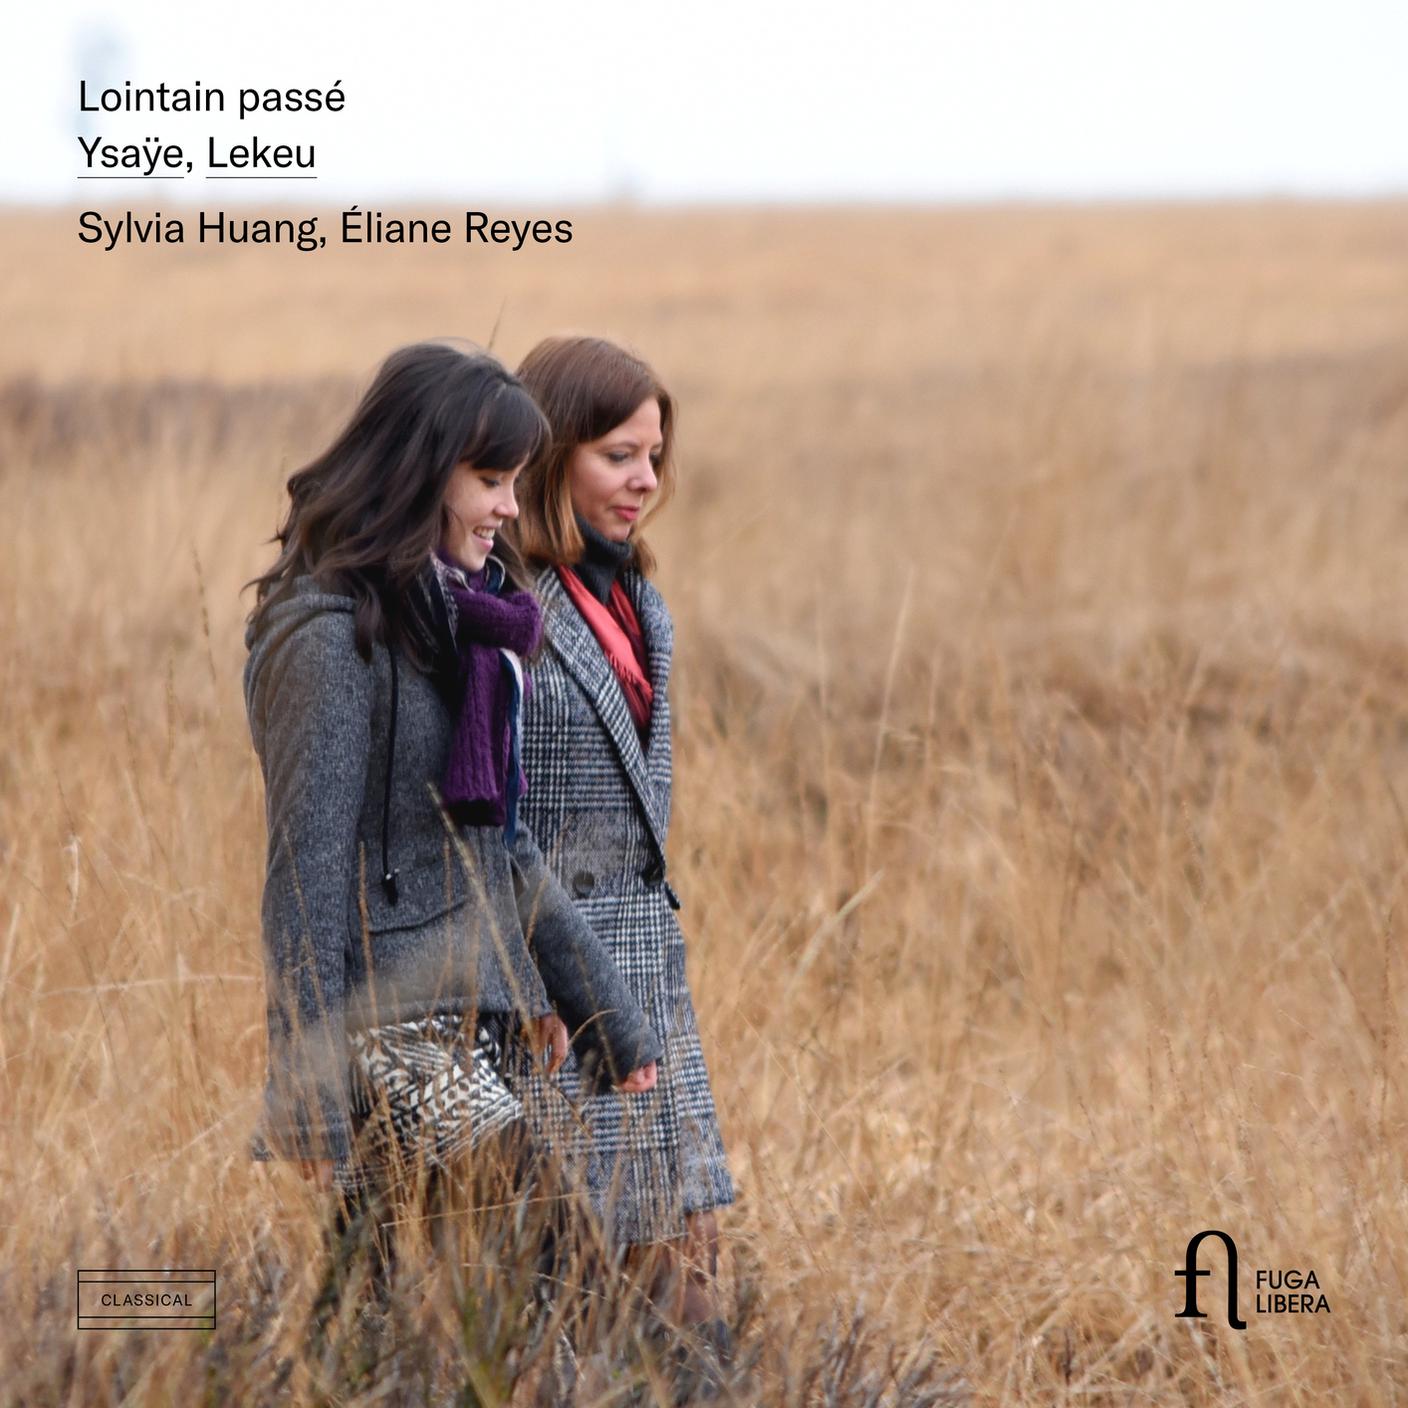 "Lointain passé" di Eliane Reyes & Sylvia Huang - Ysaÿe & Lekeu, Fuga Libera - Outhere Music (dettaglio di copertina)